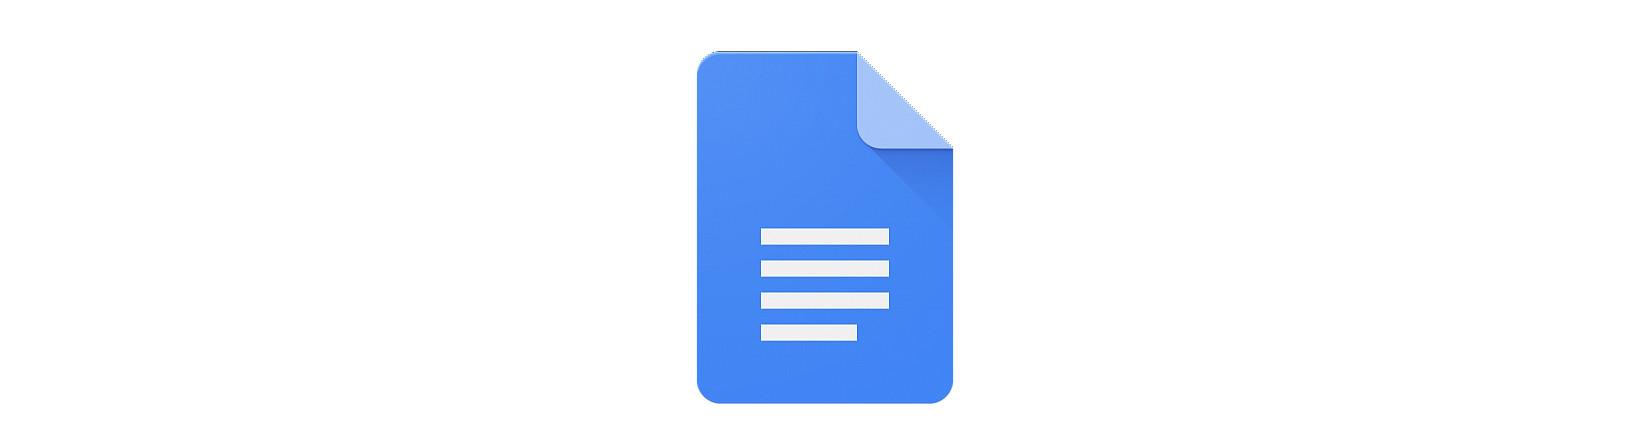 Google Docs Logo - Google Docs: Änderungen nachverfolgen - RandomBrick.de